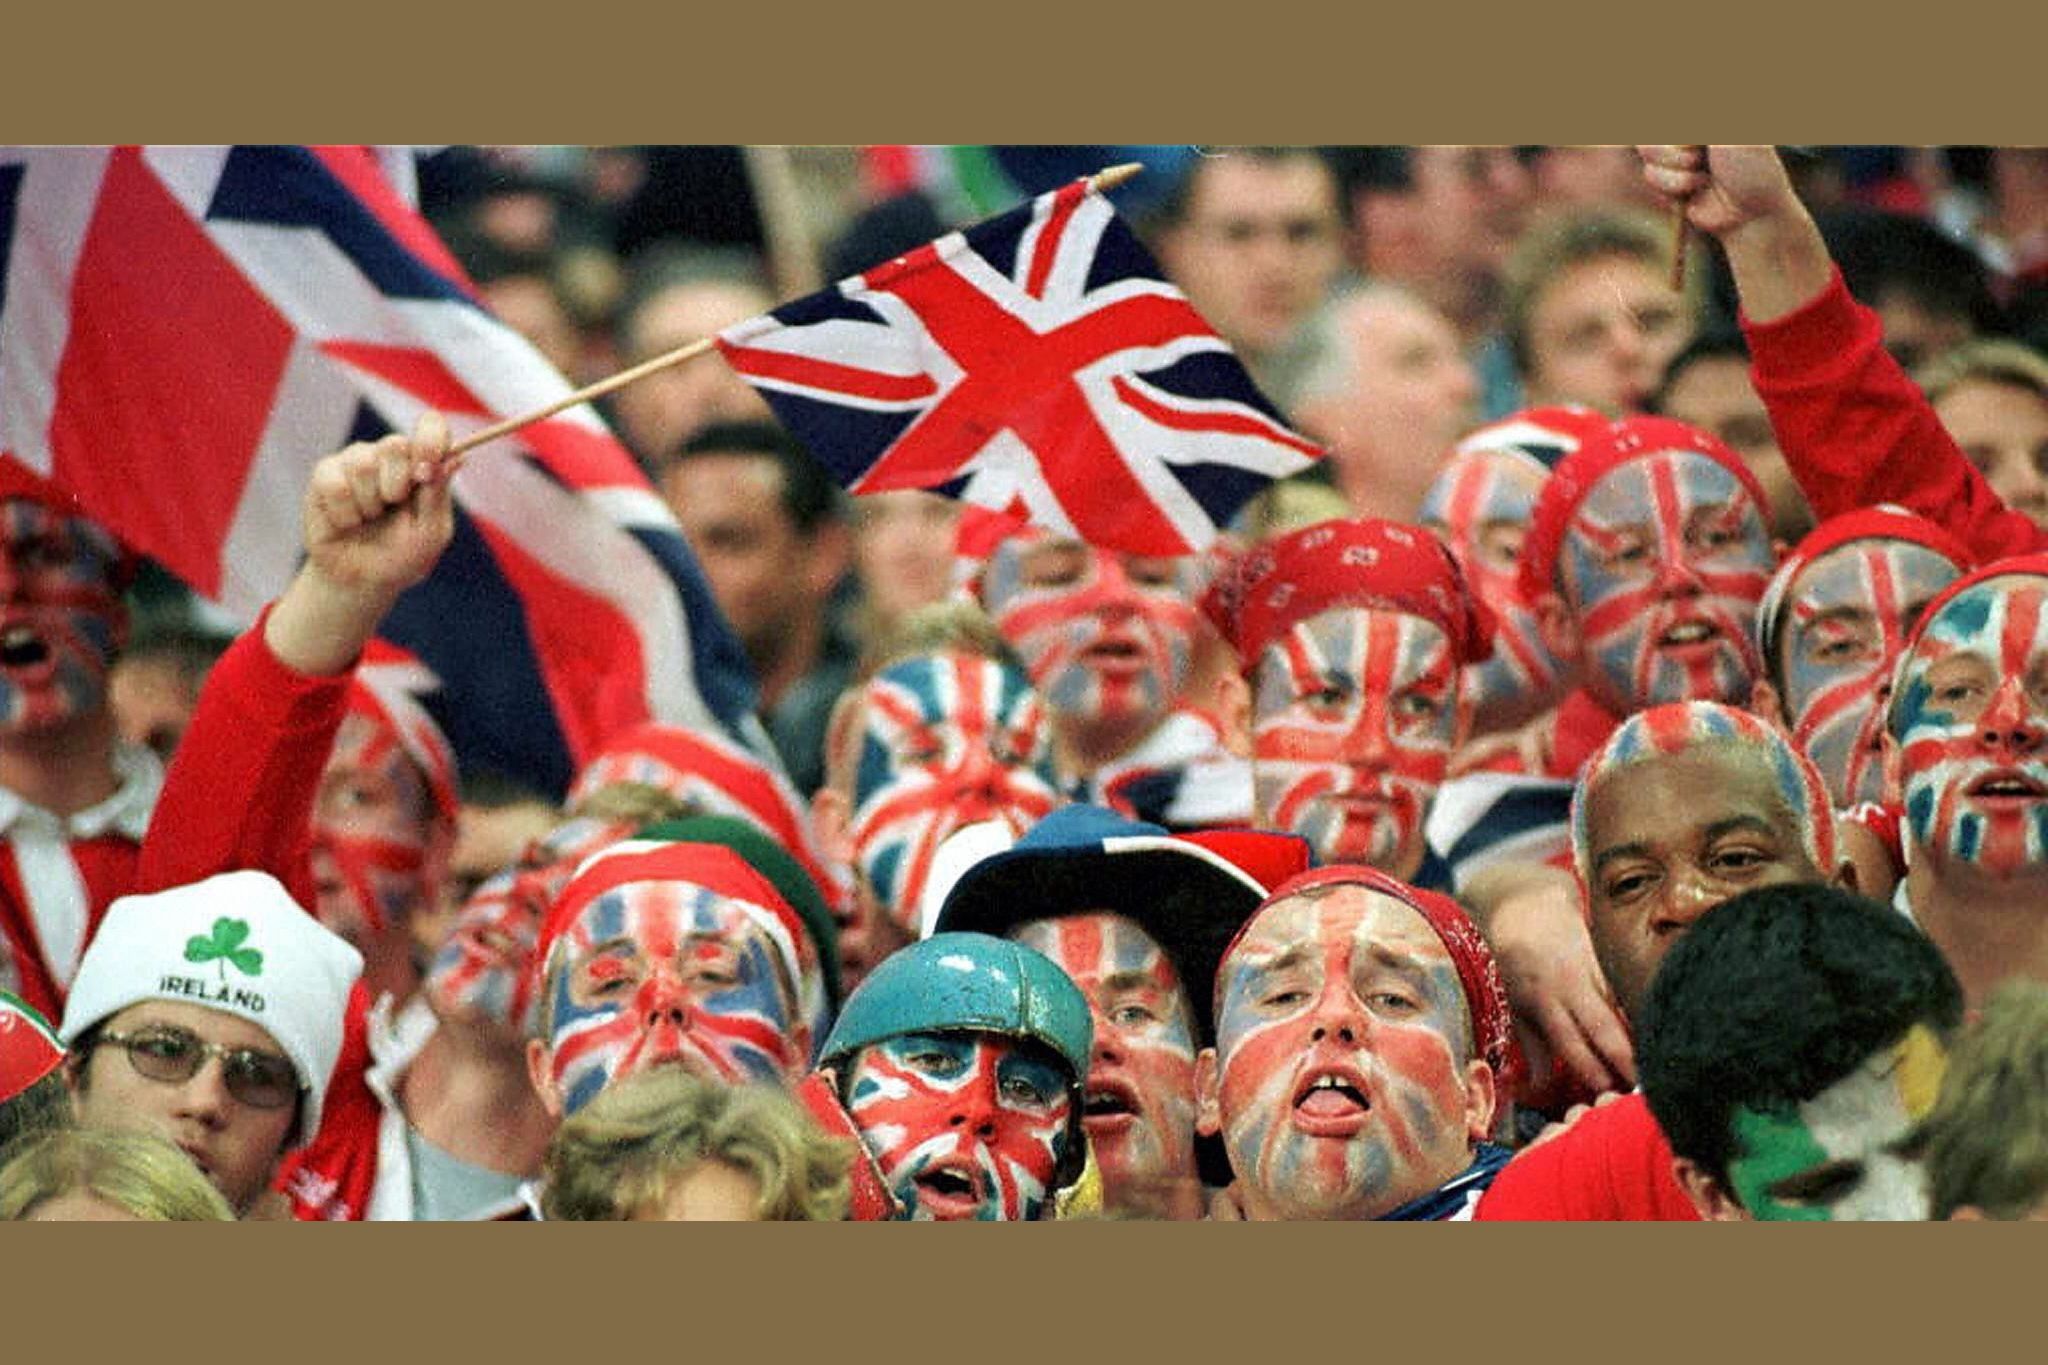 Britain which is formally. Британский спорт. Спорт в Великобритании. Британские традиции спорт. Спорт в Британии картинки.